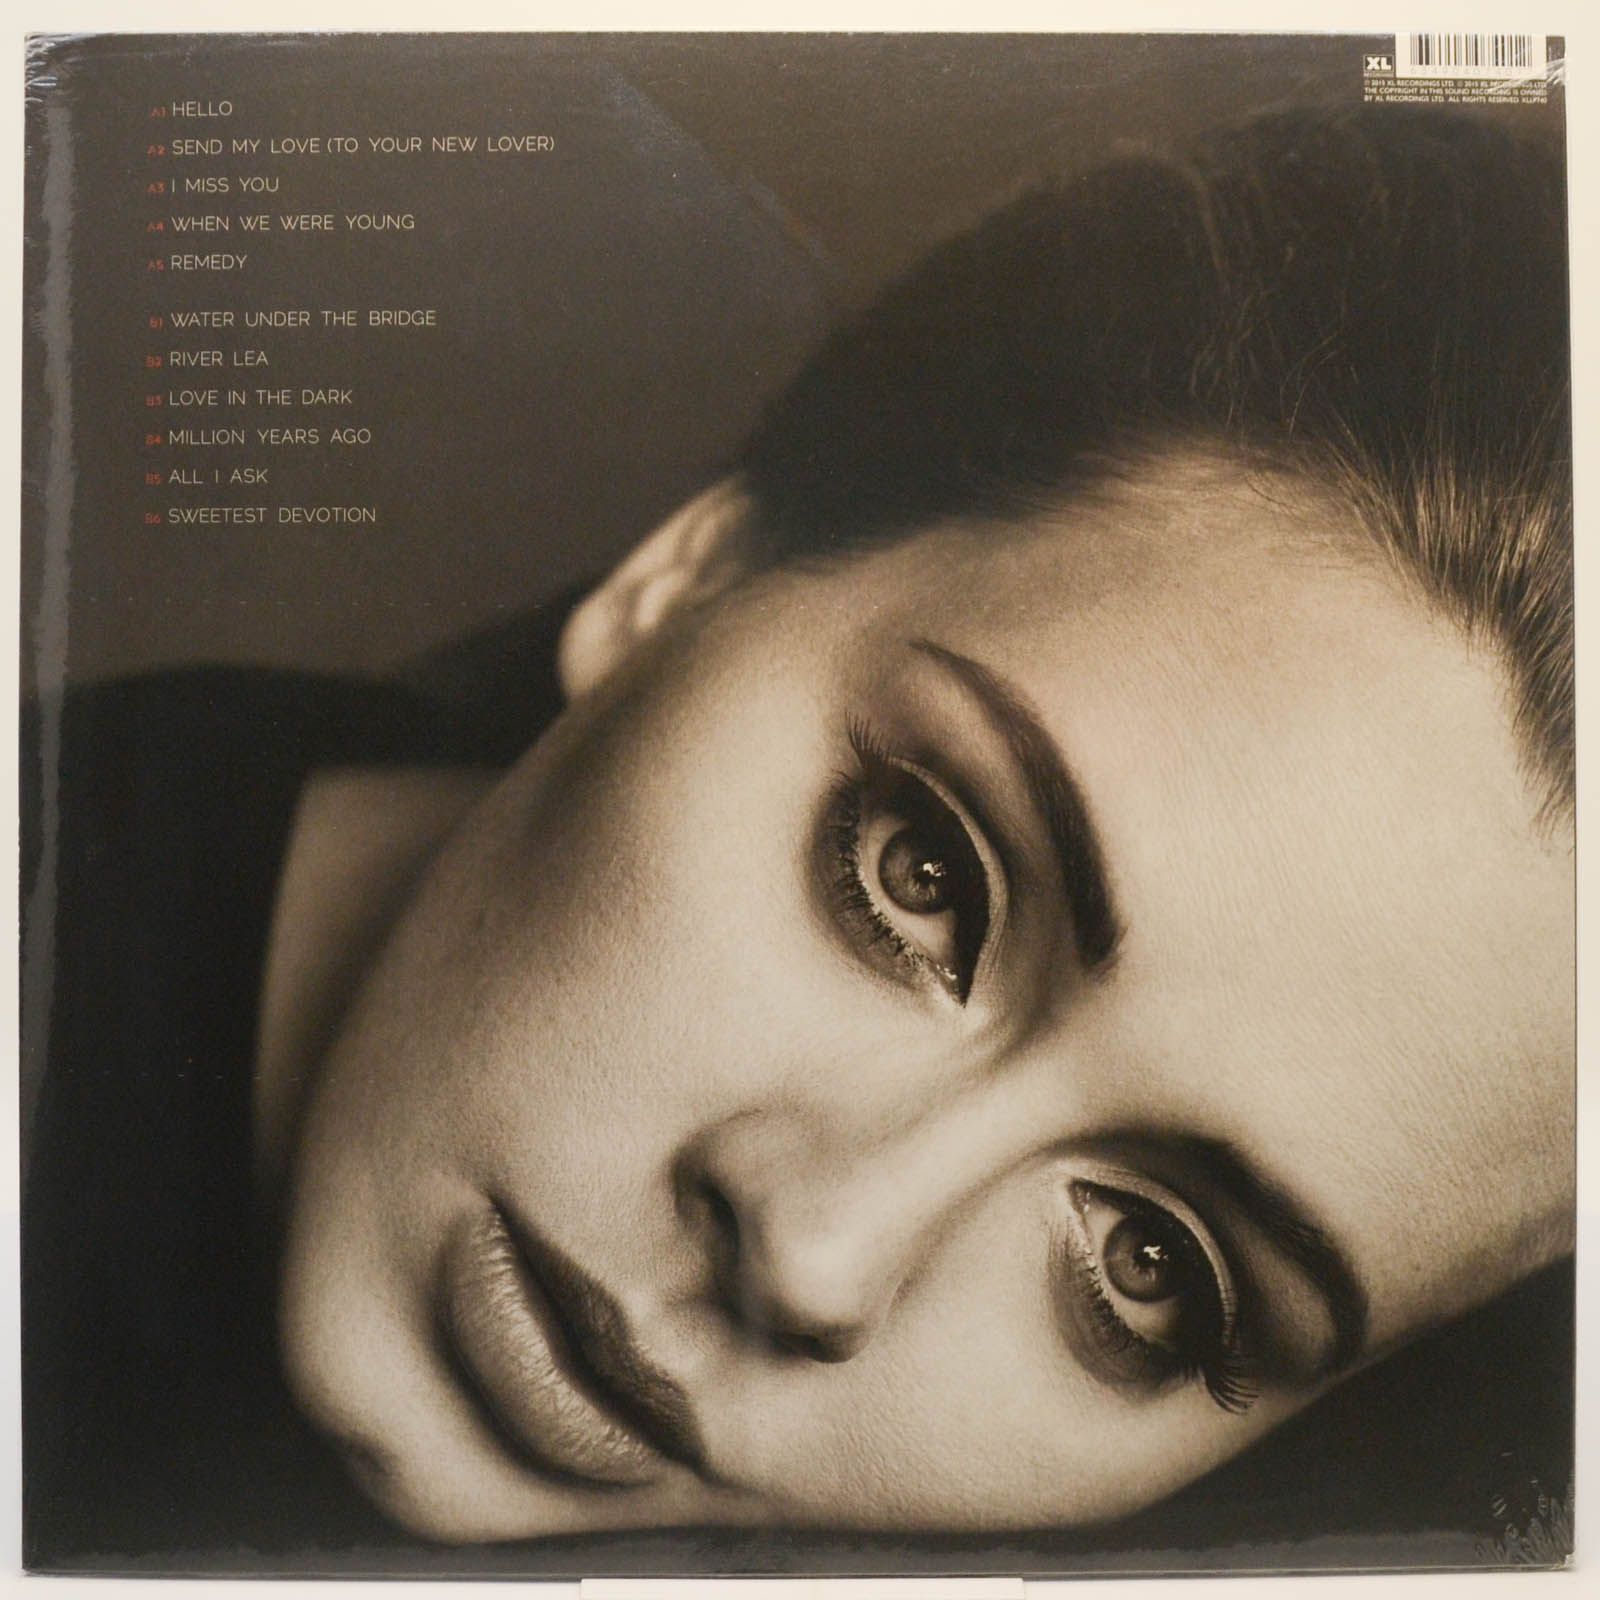 Adele — 25, 2015